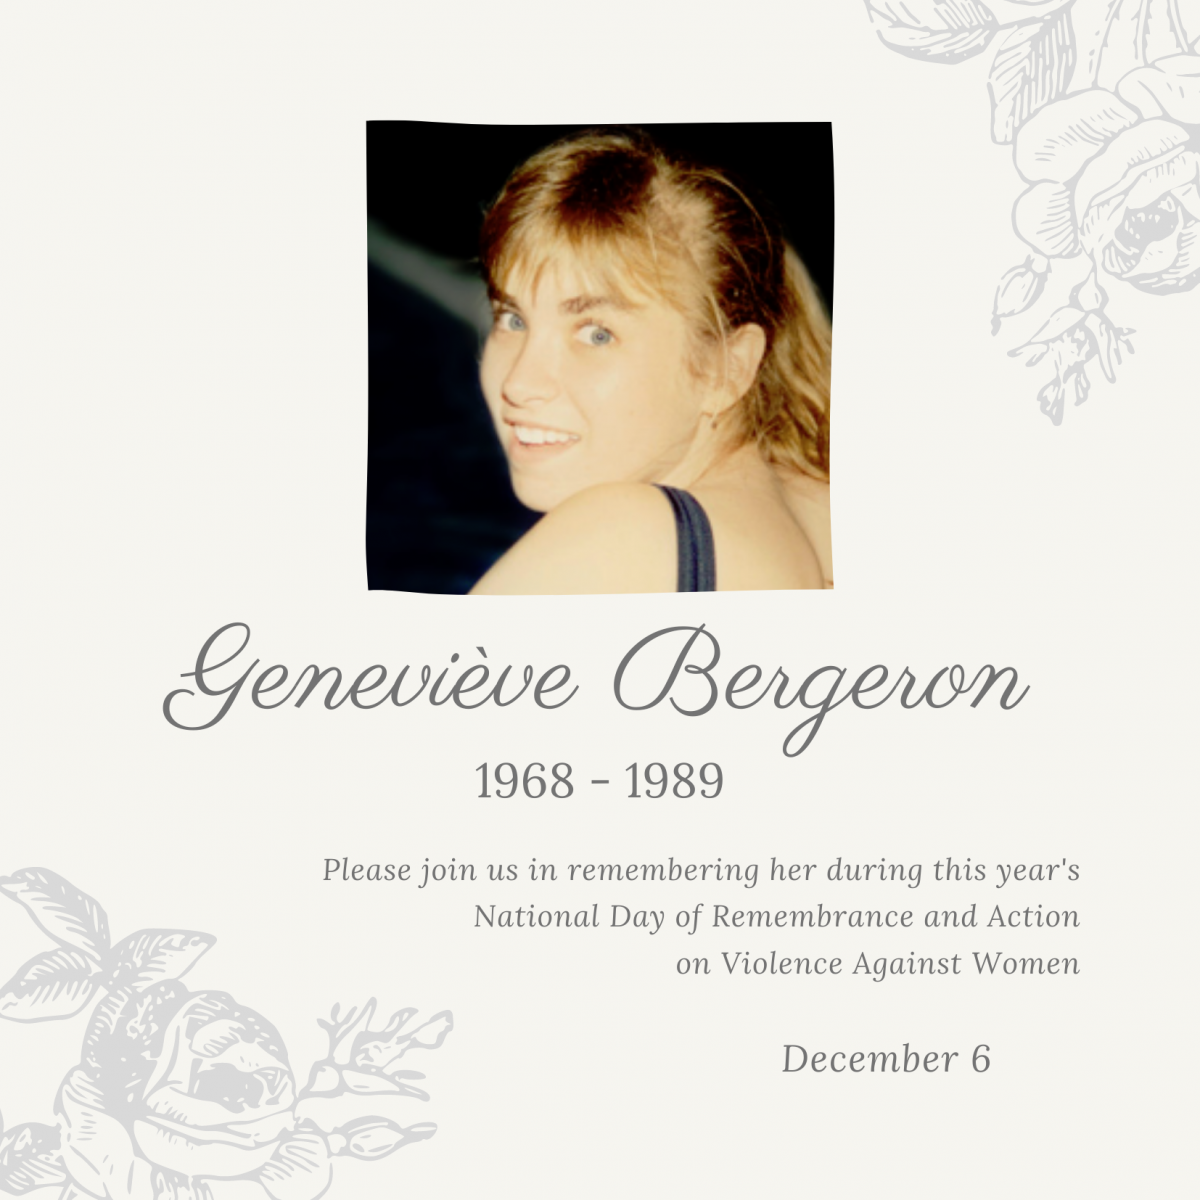 Geneviève Bergeron. 1968 to 1989.